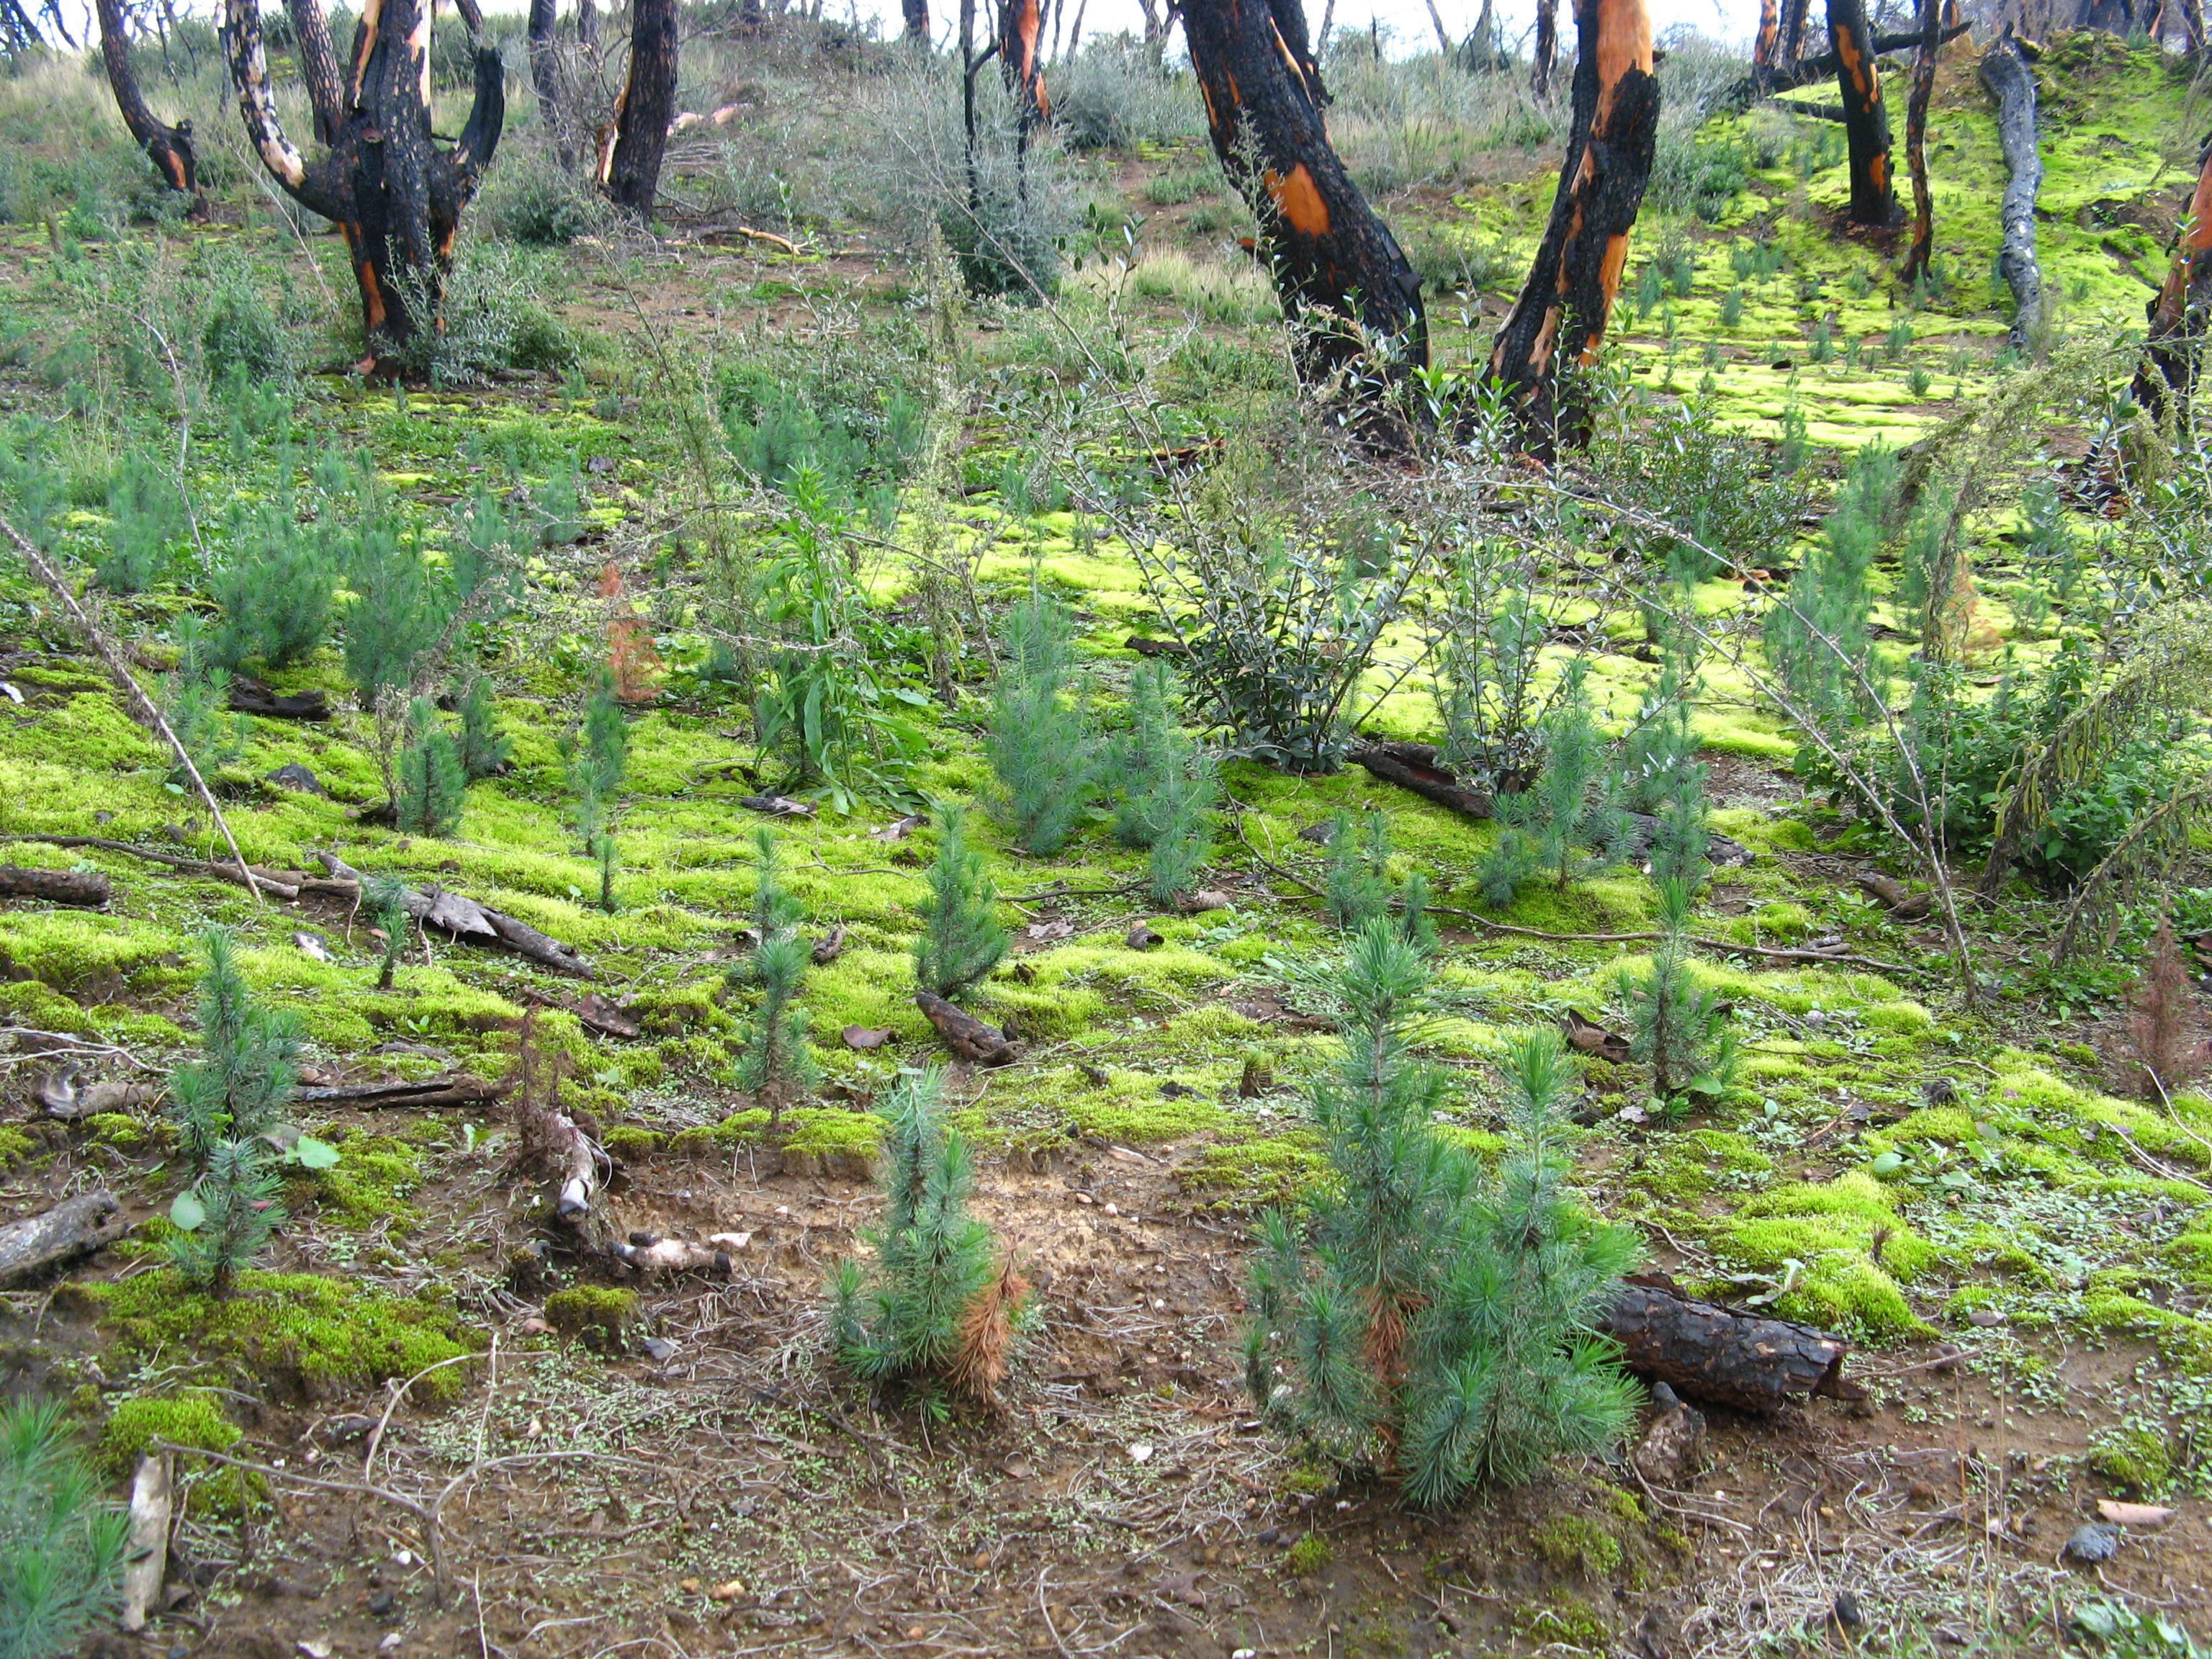 File:Small pine trees near Koliri village.jpg - Wikimedia Commons